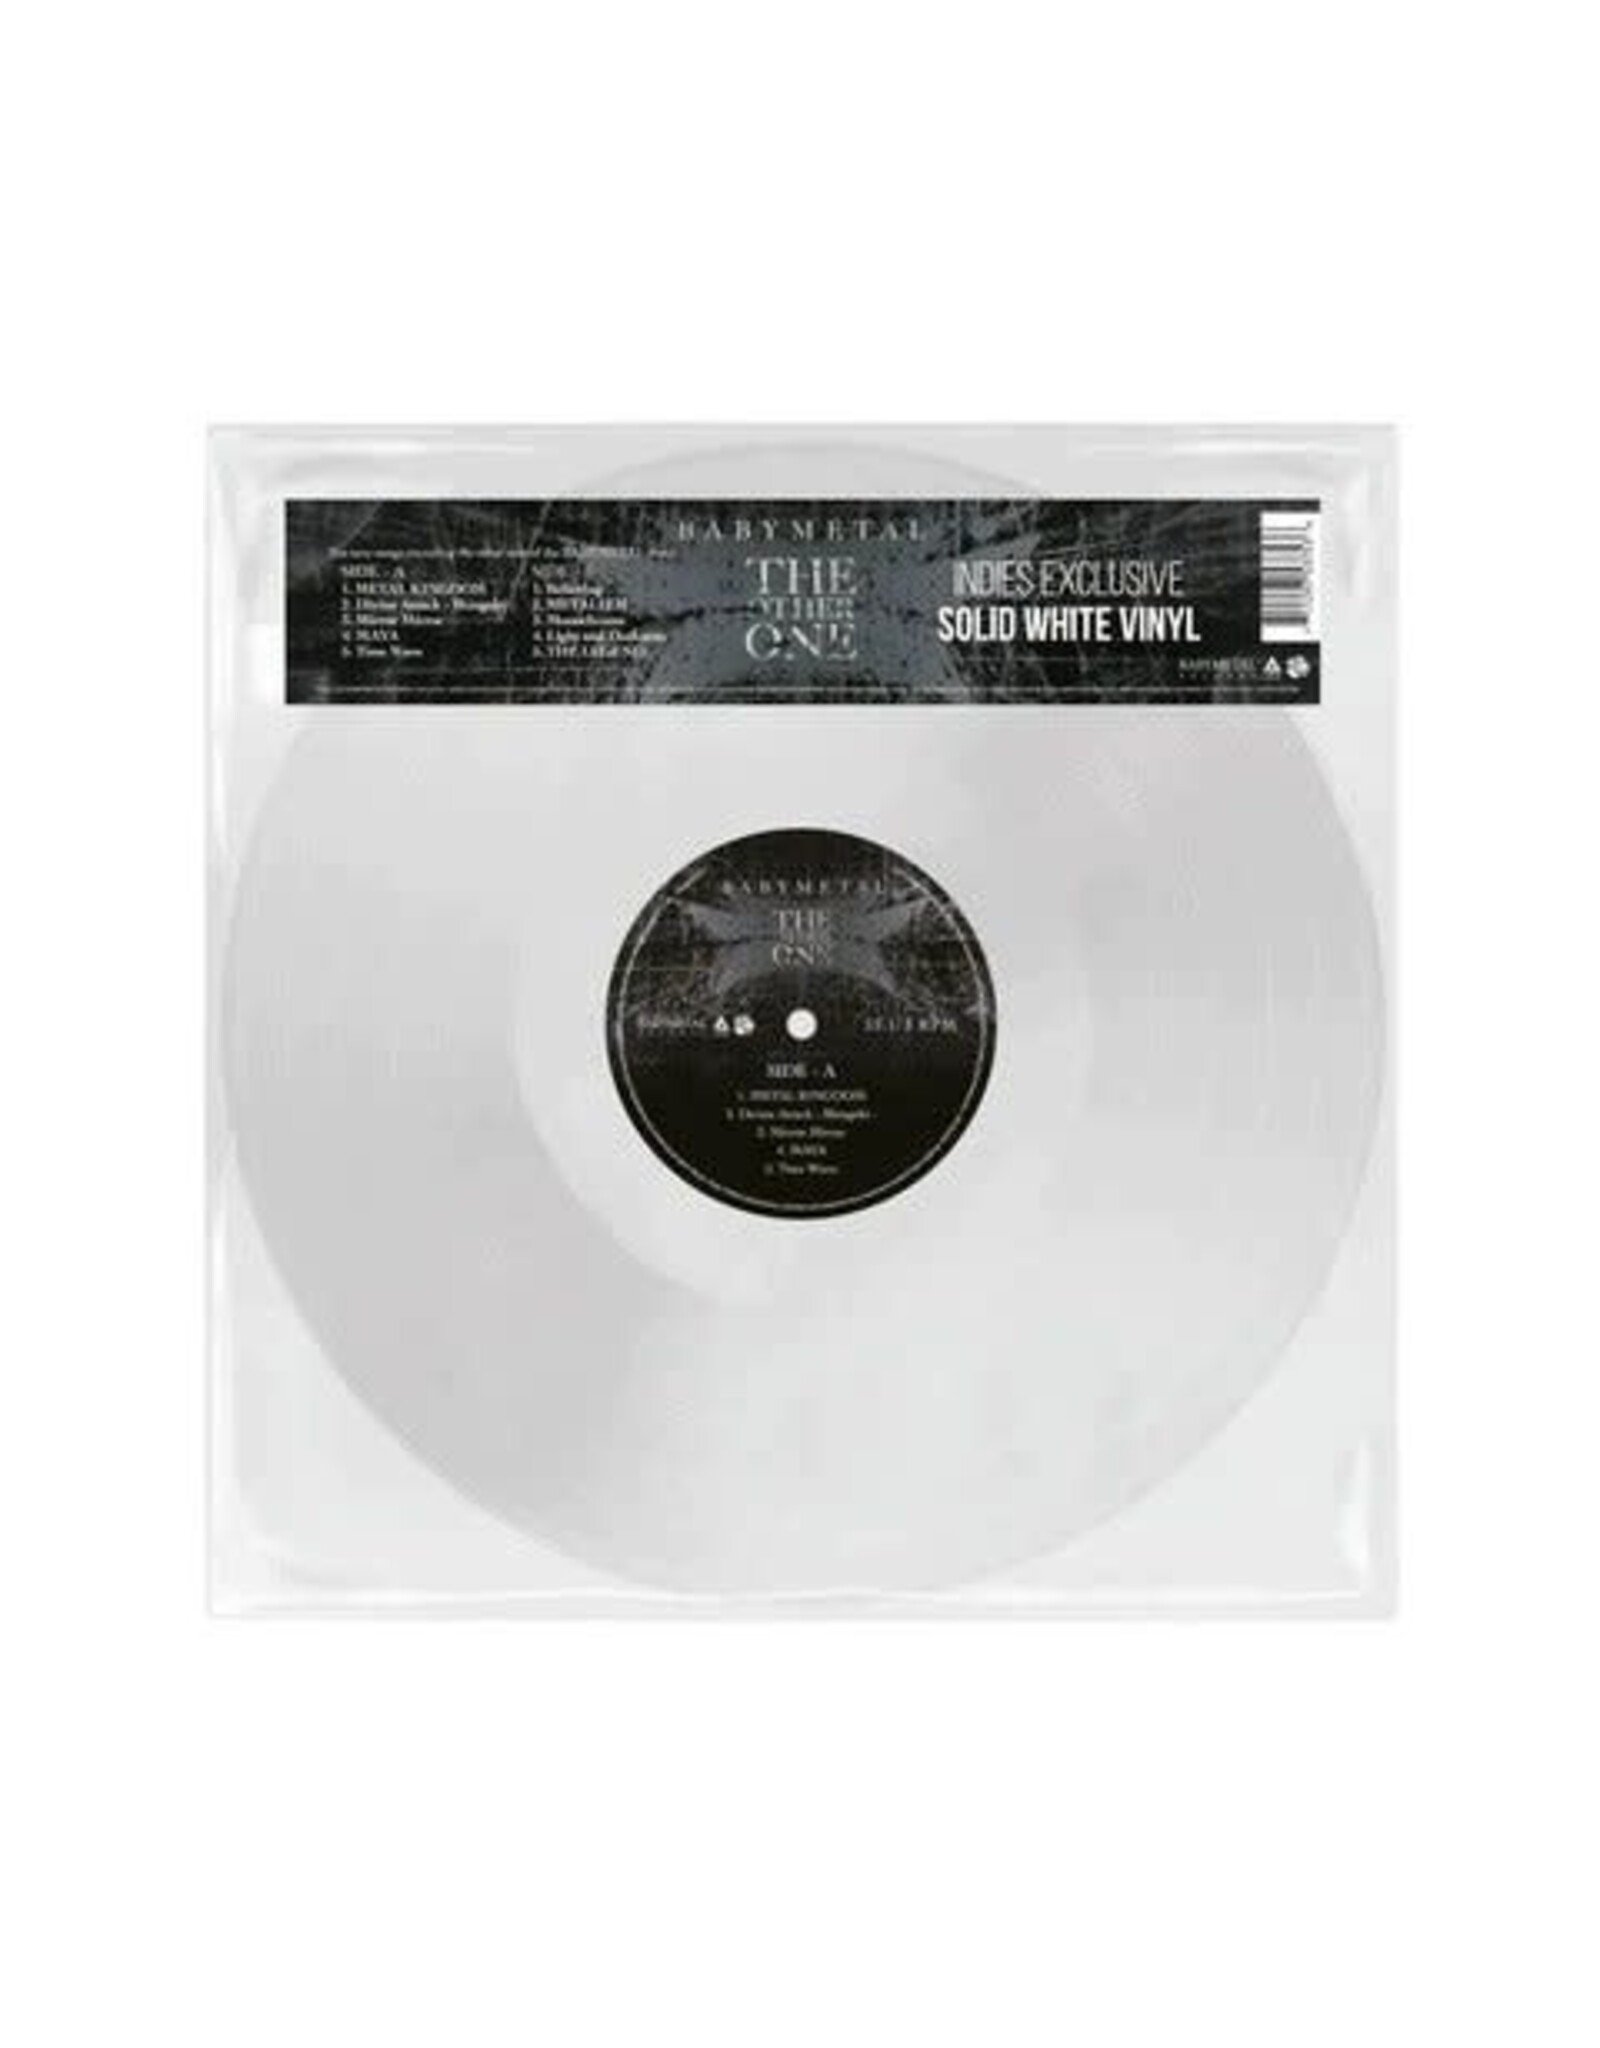 Babymetal - The Other One (White Vinyl)